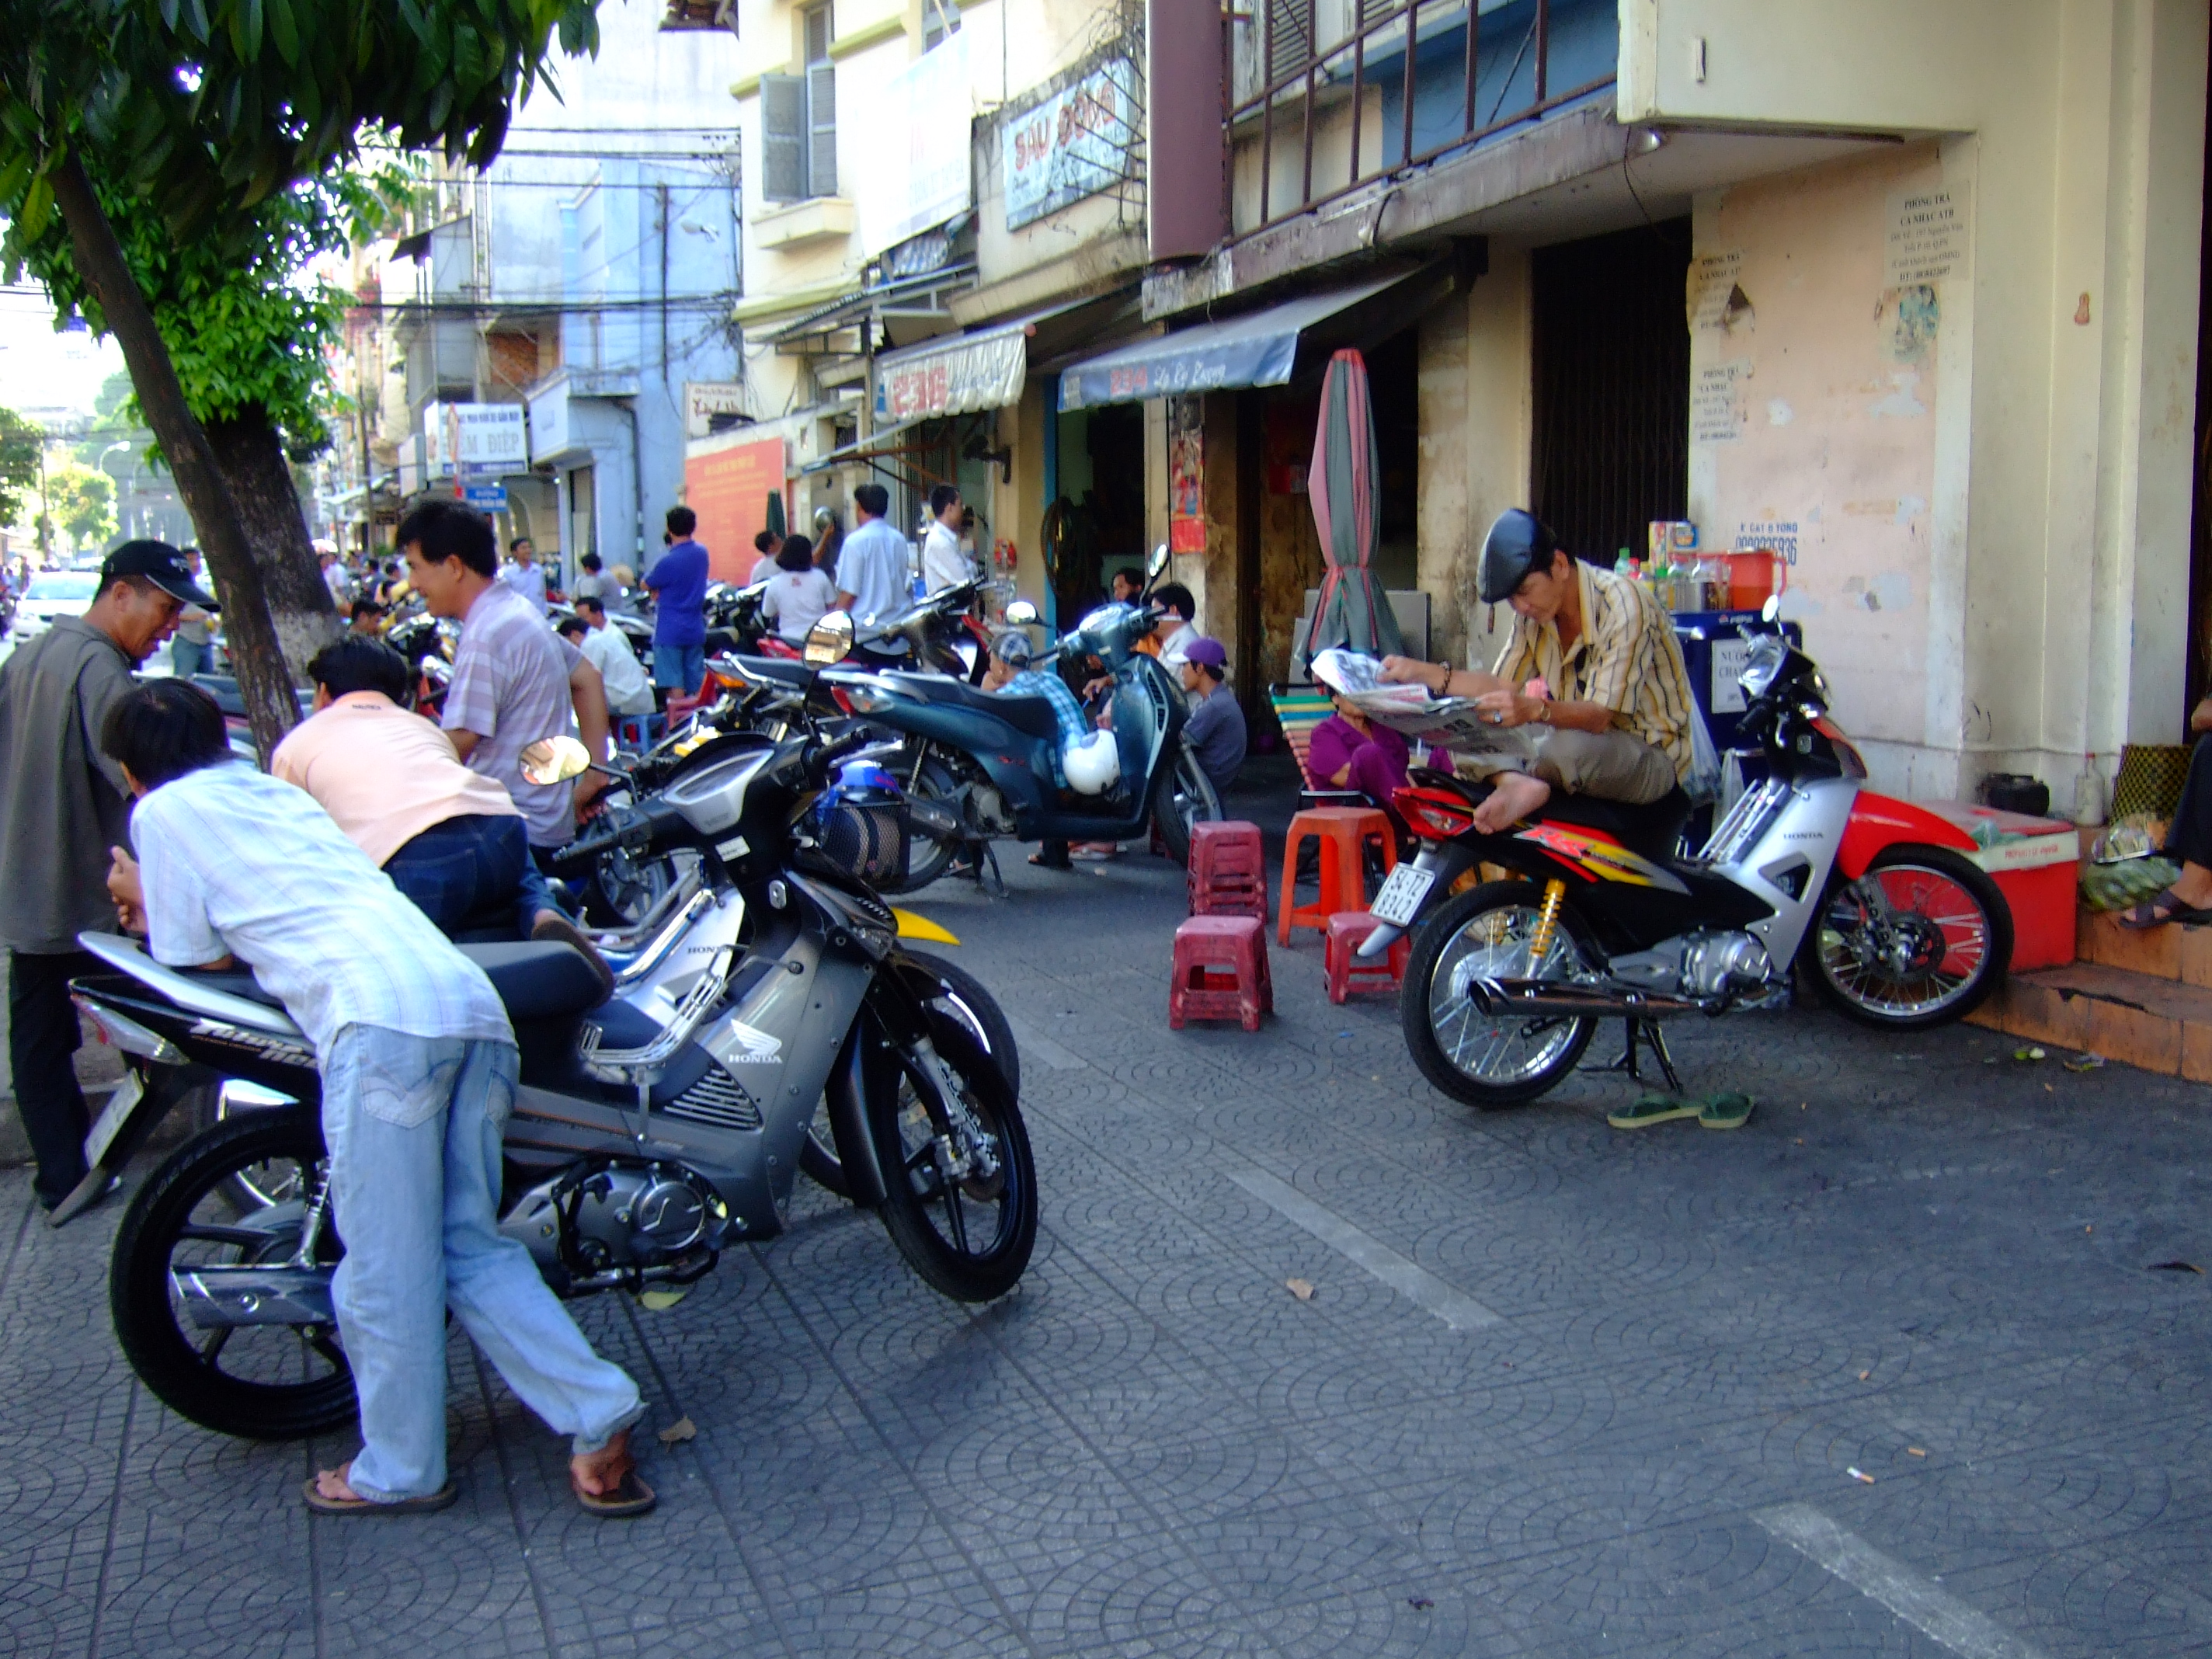 Vietnam Ho Chi Minh City motorbike street scenes Feb 2009 077